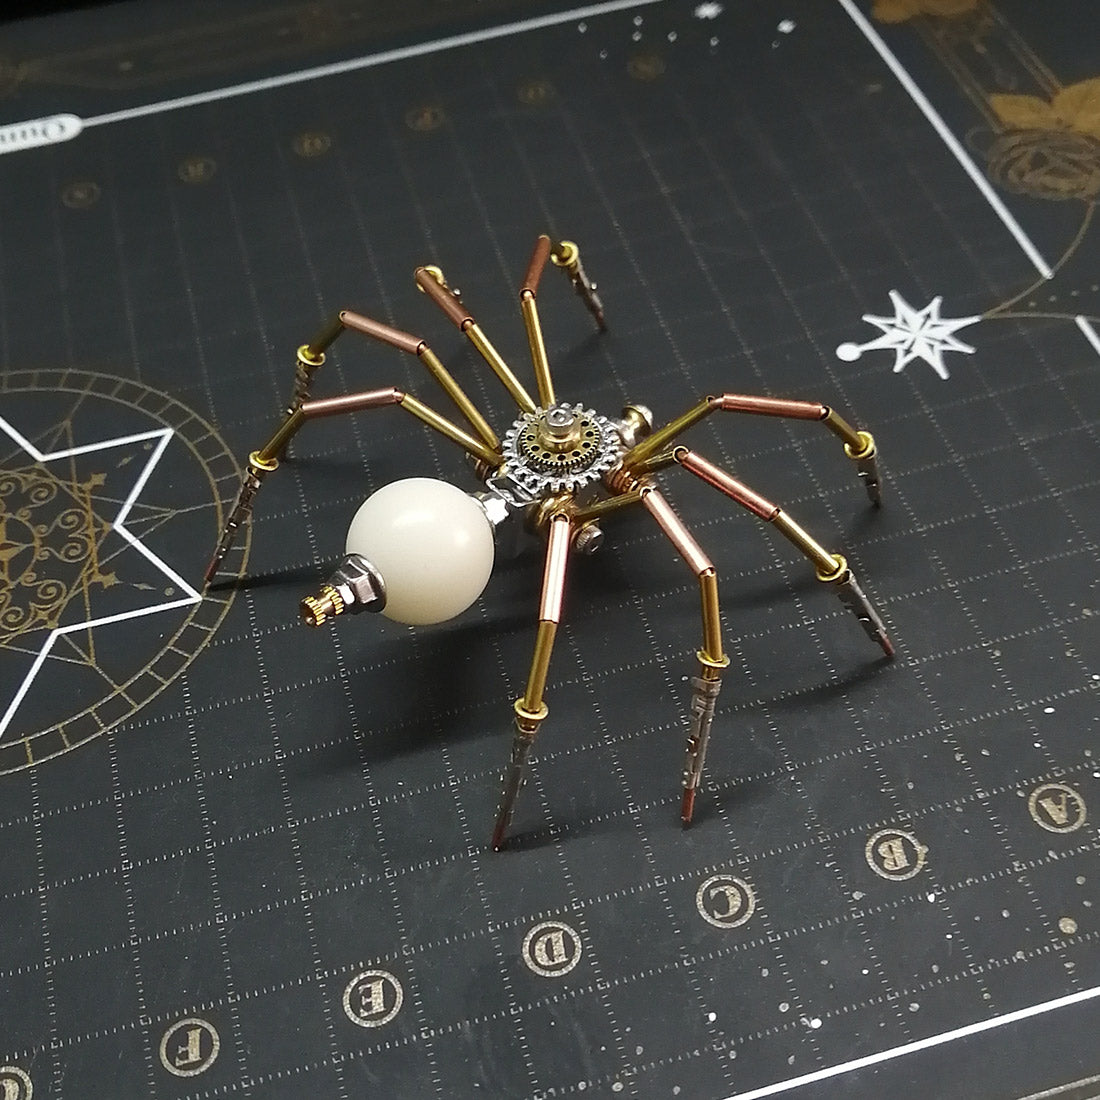 Steampunk Miniature Brass Spider 3D Metal Puzzle for Kids